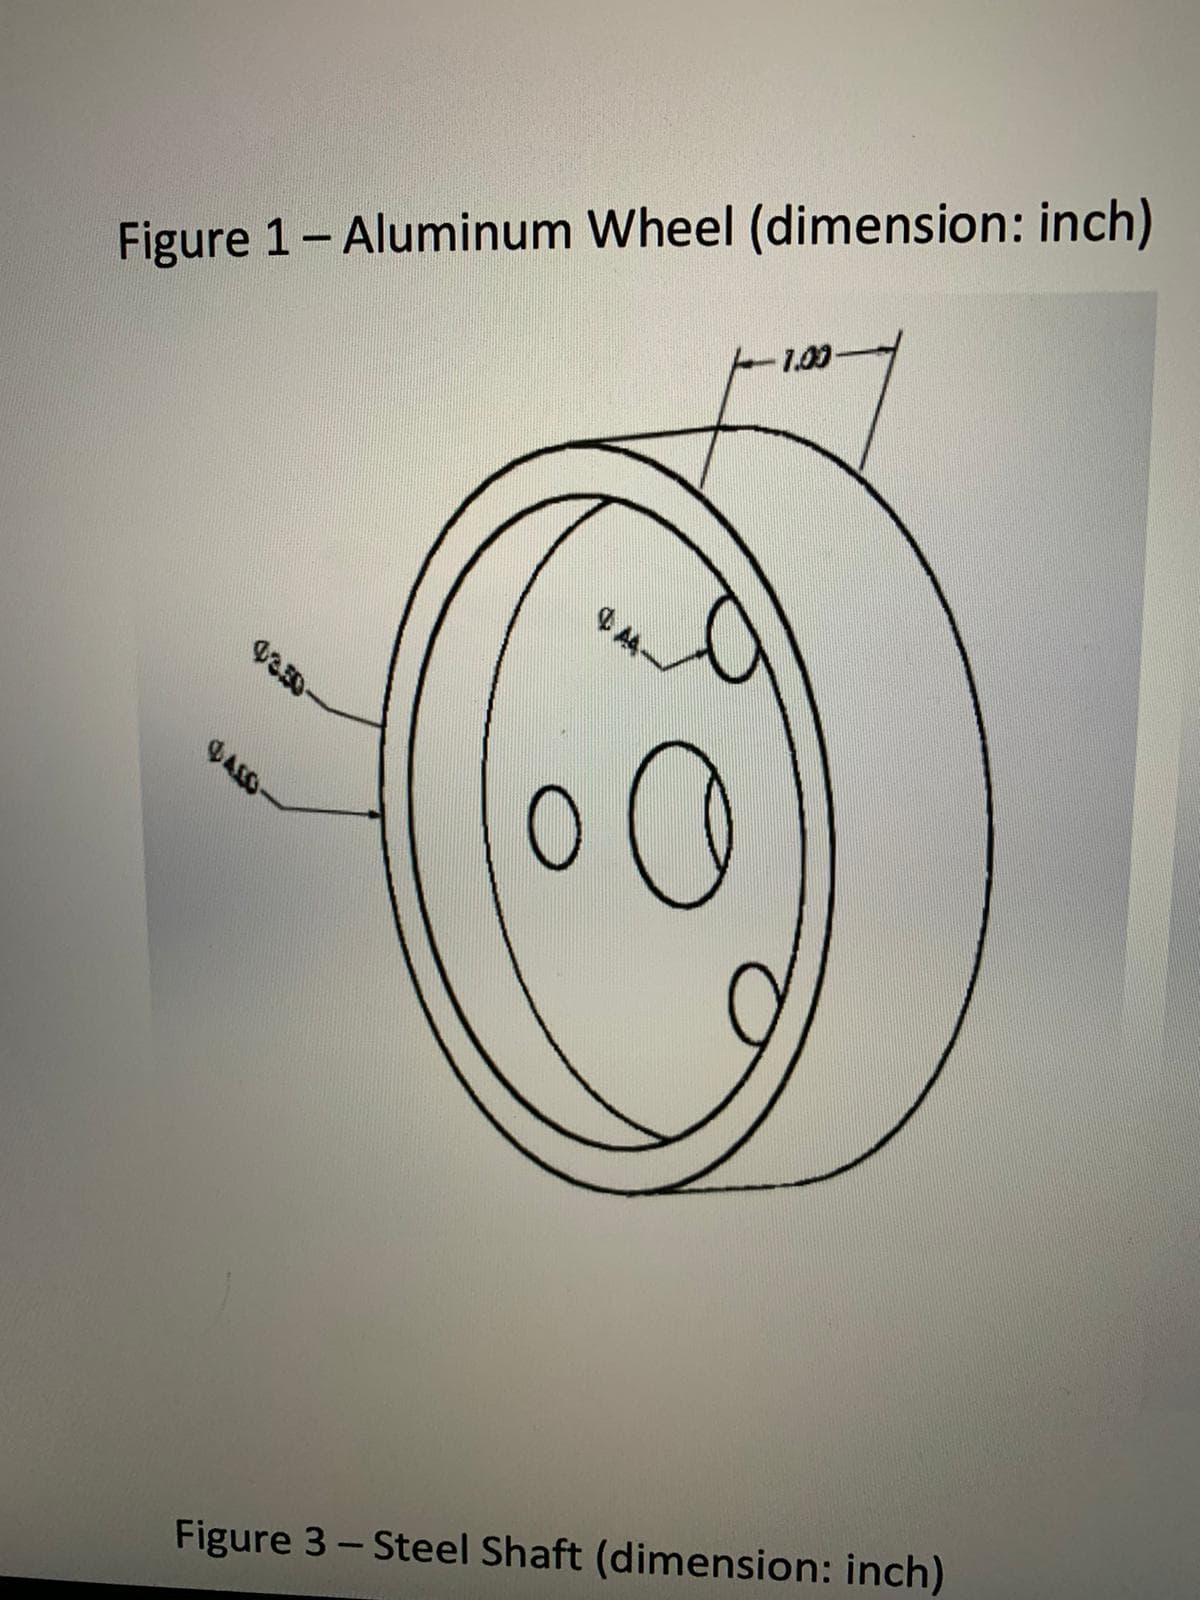 1.00
Figure 1-Aluminum Wheel (dimension: inch)
¢AA
AEO
Figure 3- Steel Shaft (dimension: inch)
